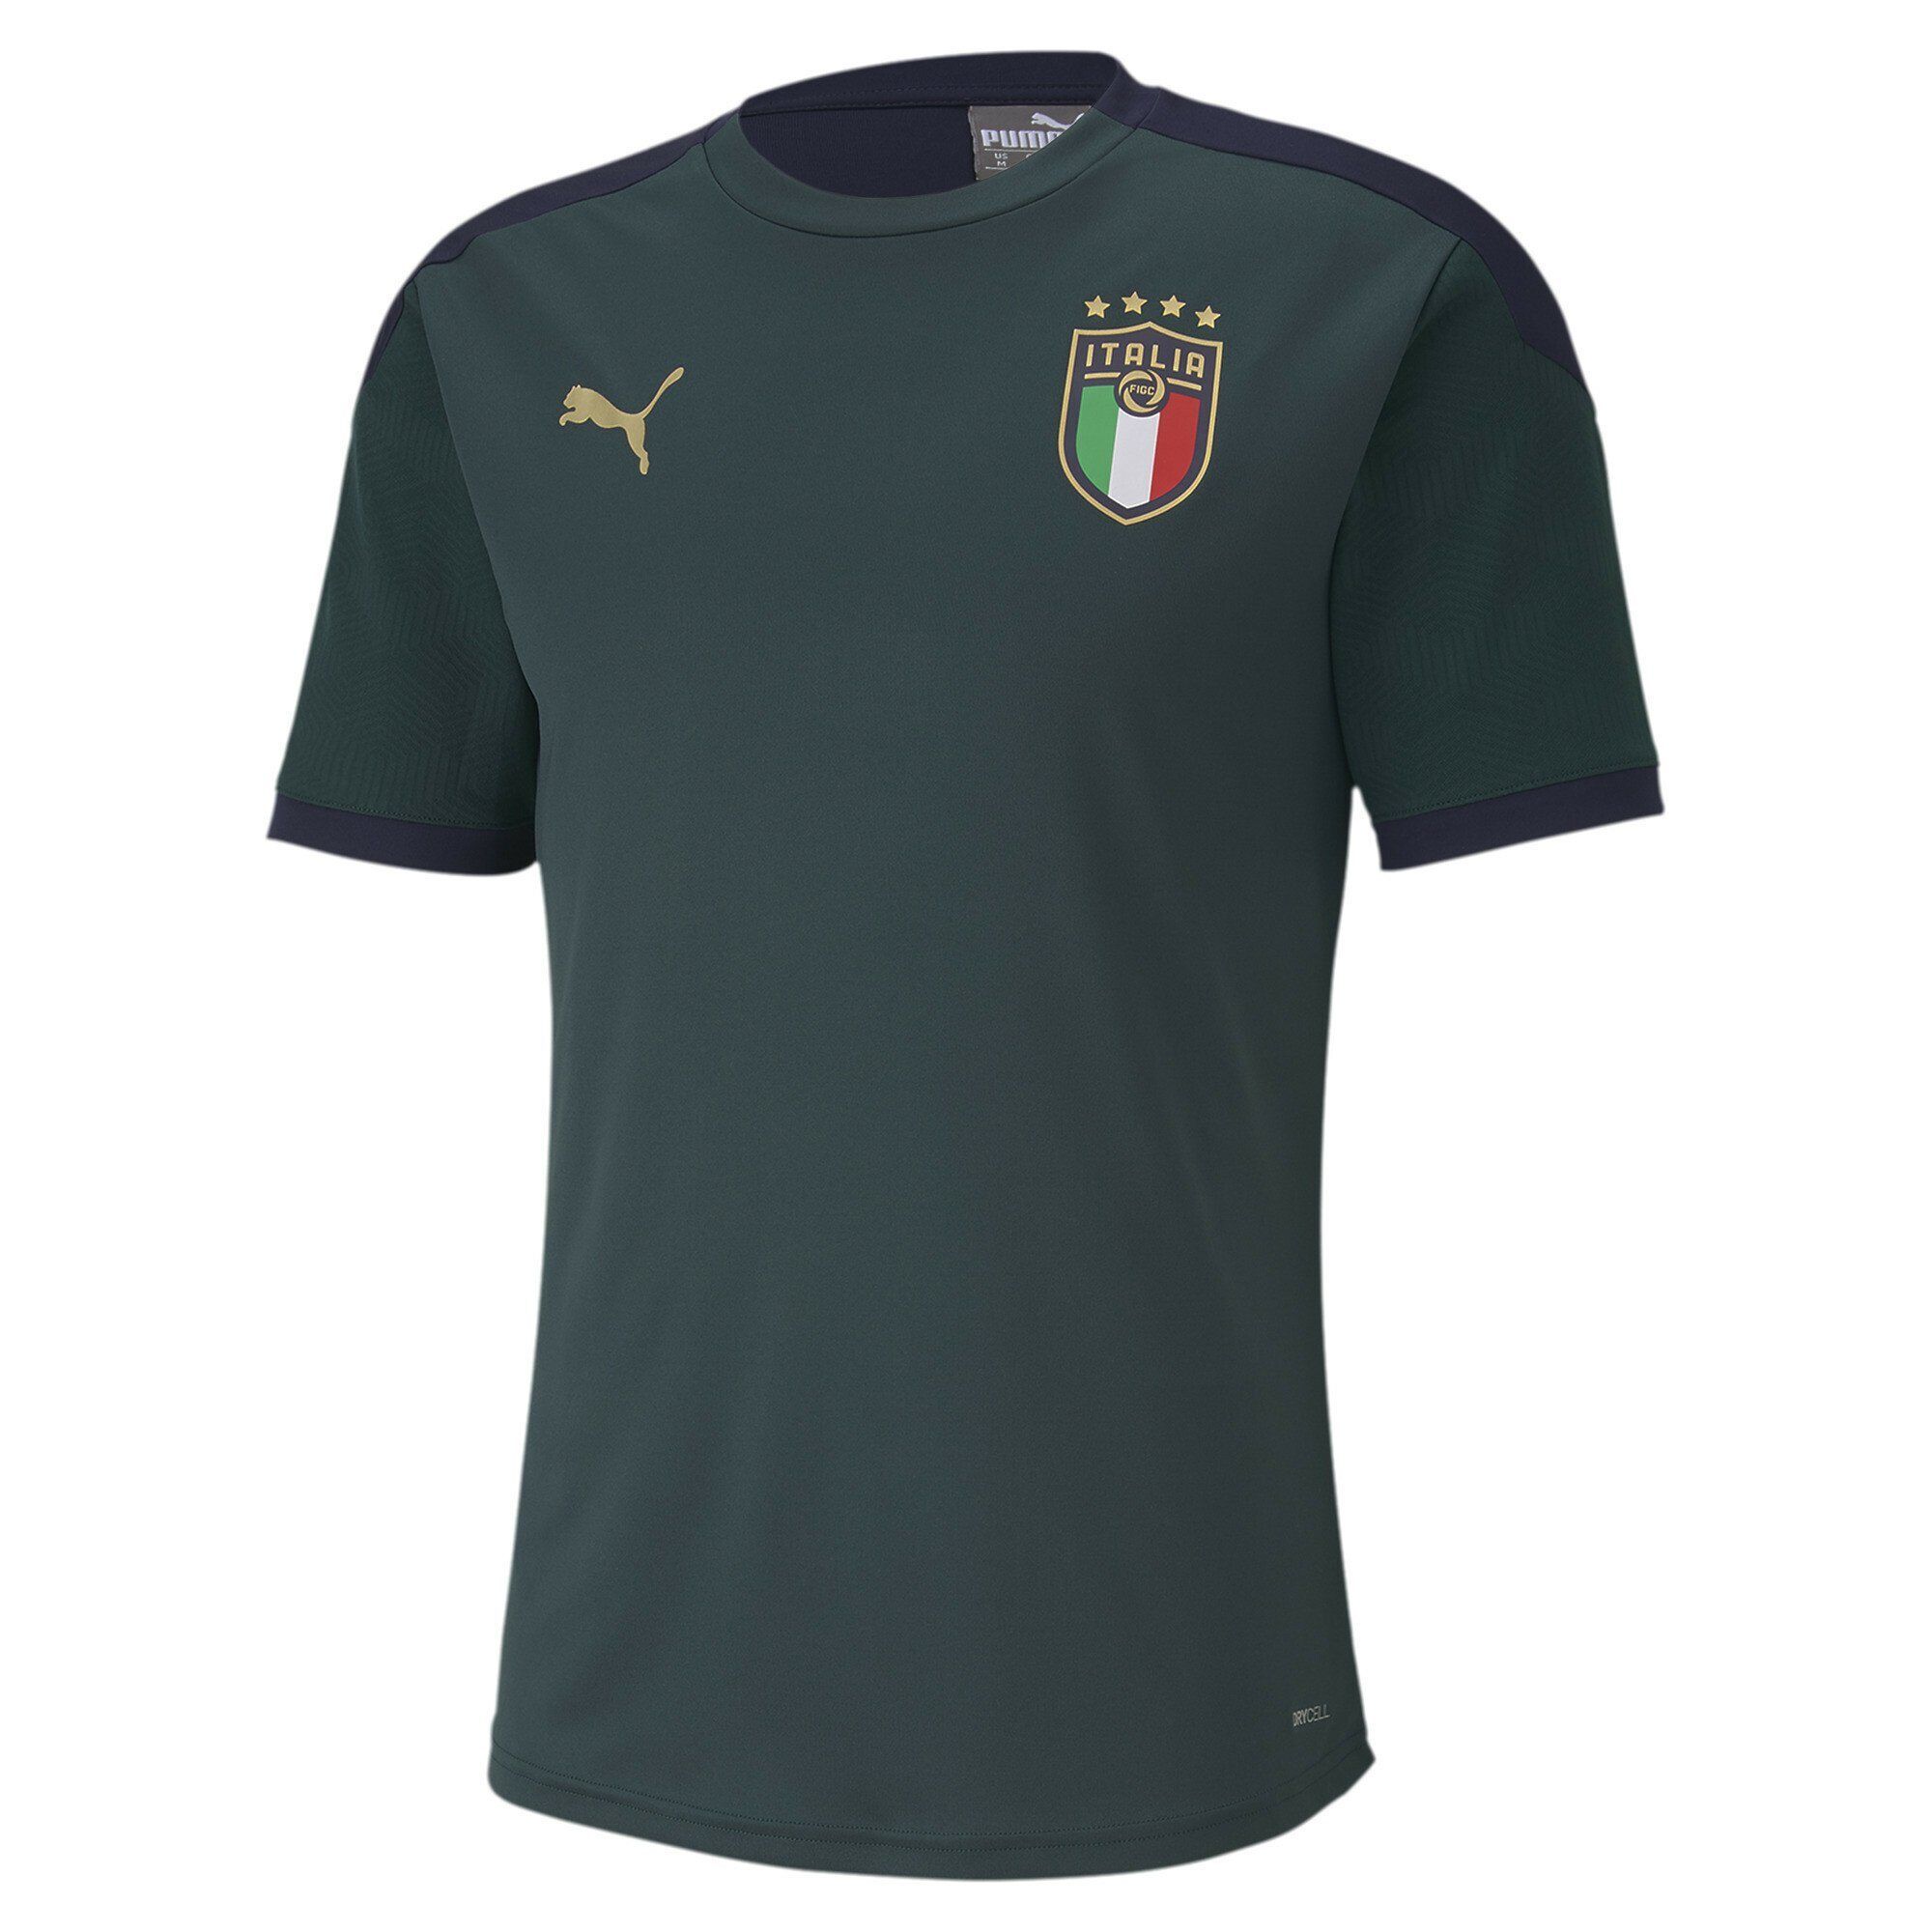 Puma T-Shirt »Italia Herren Trainingstrikot«, graugrün